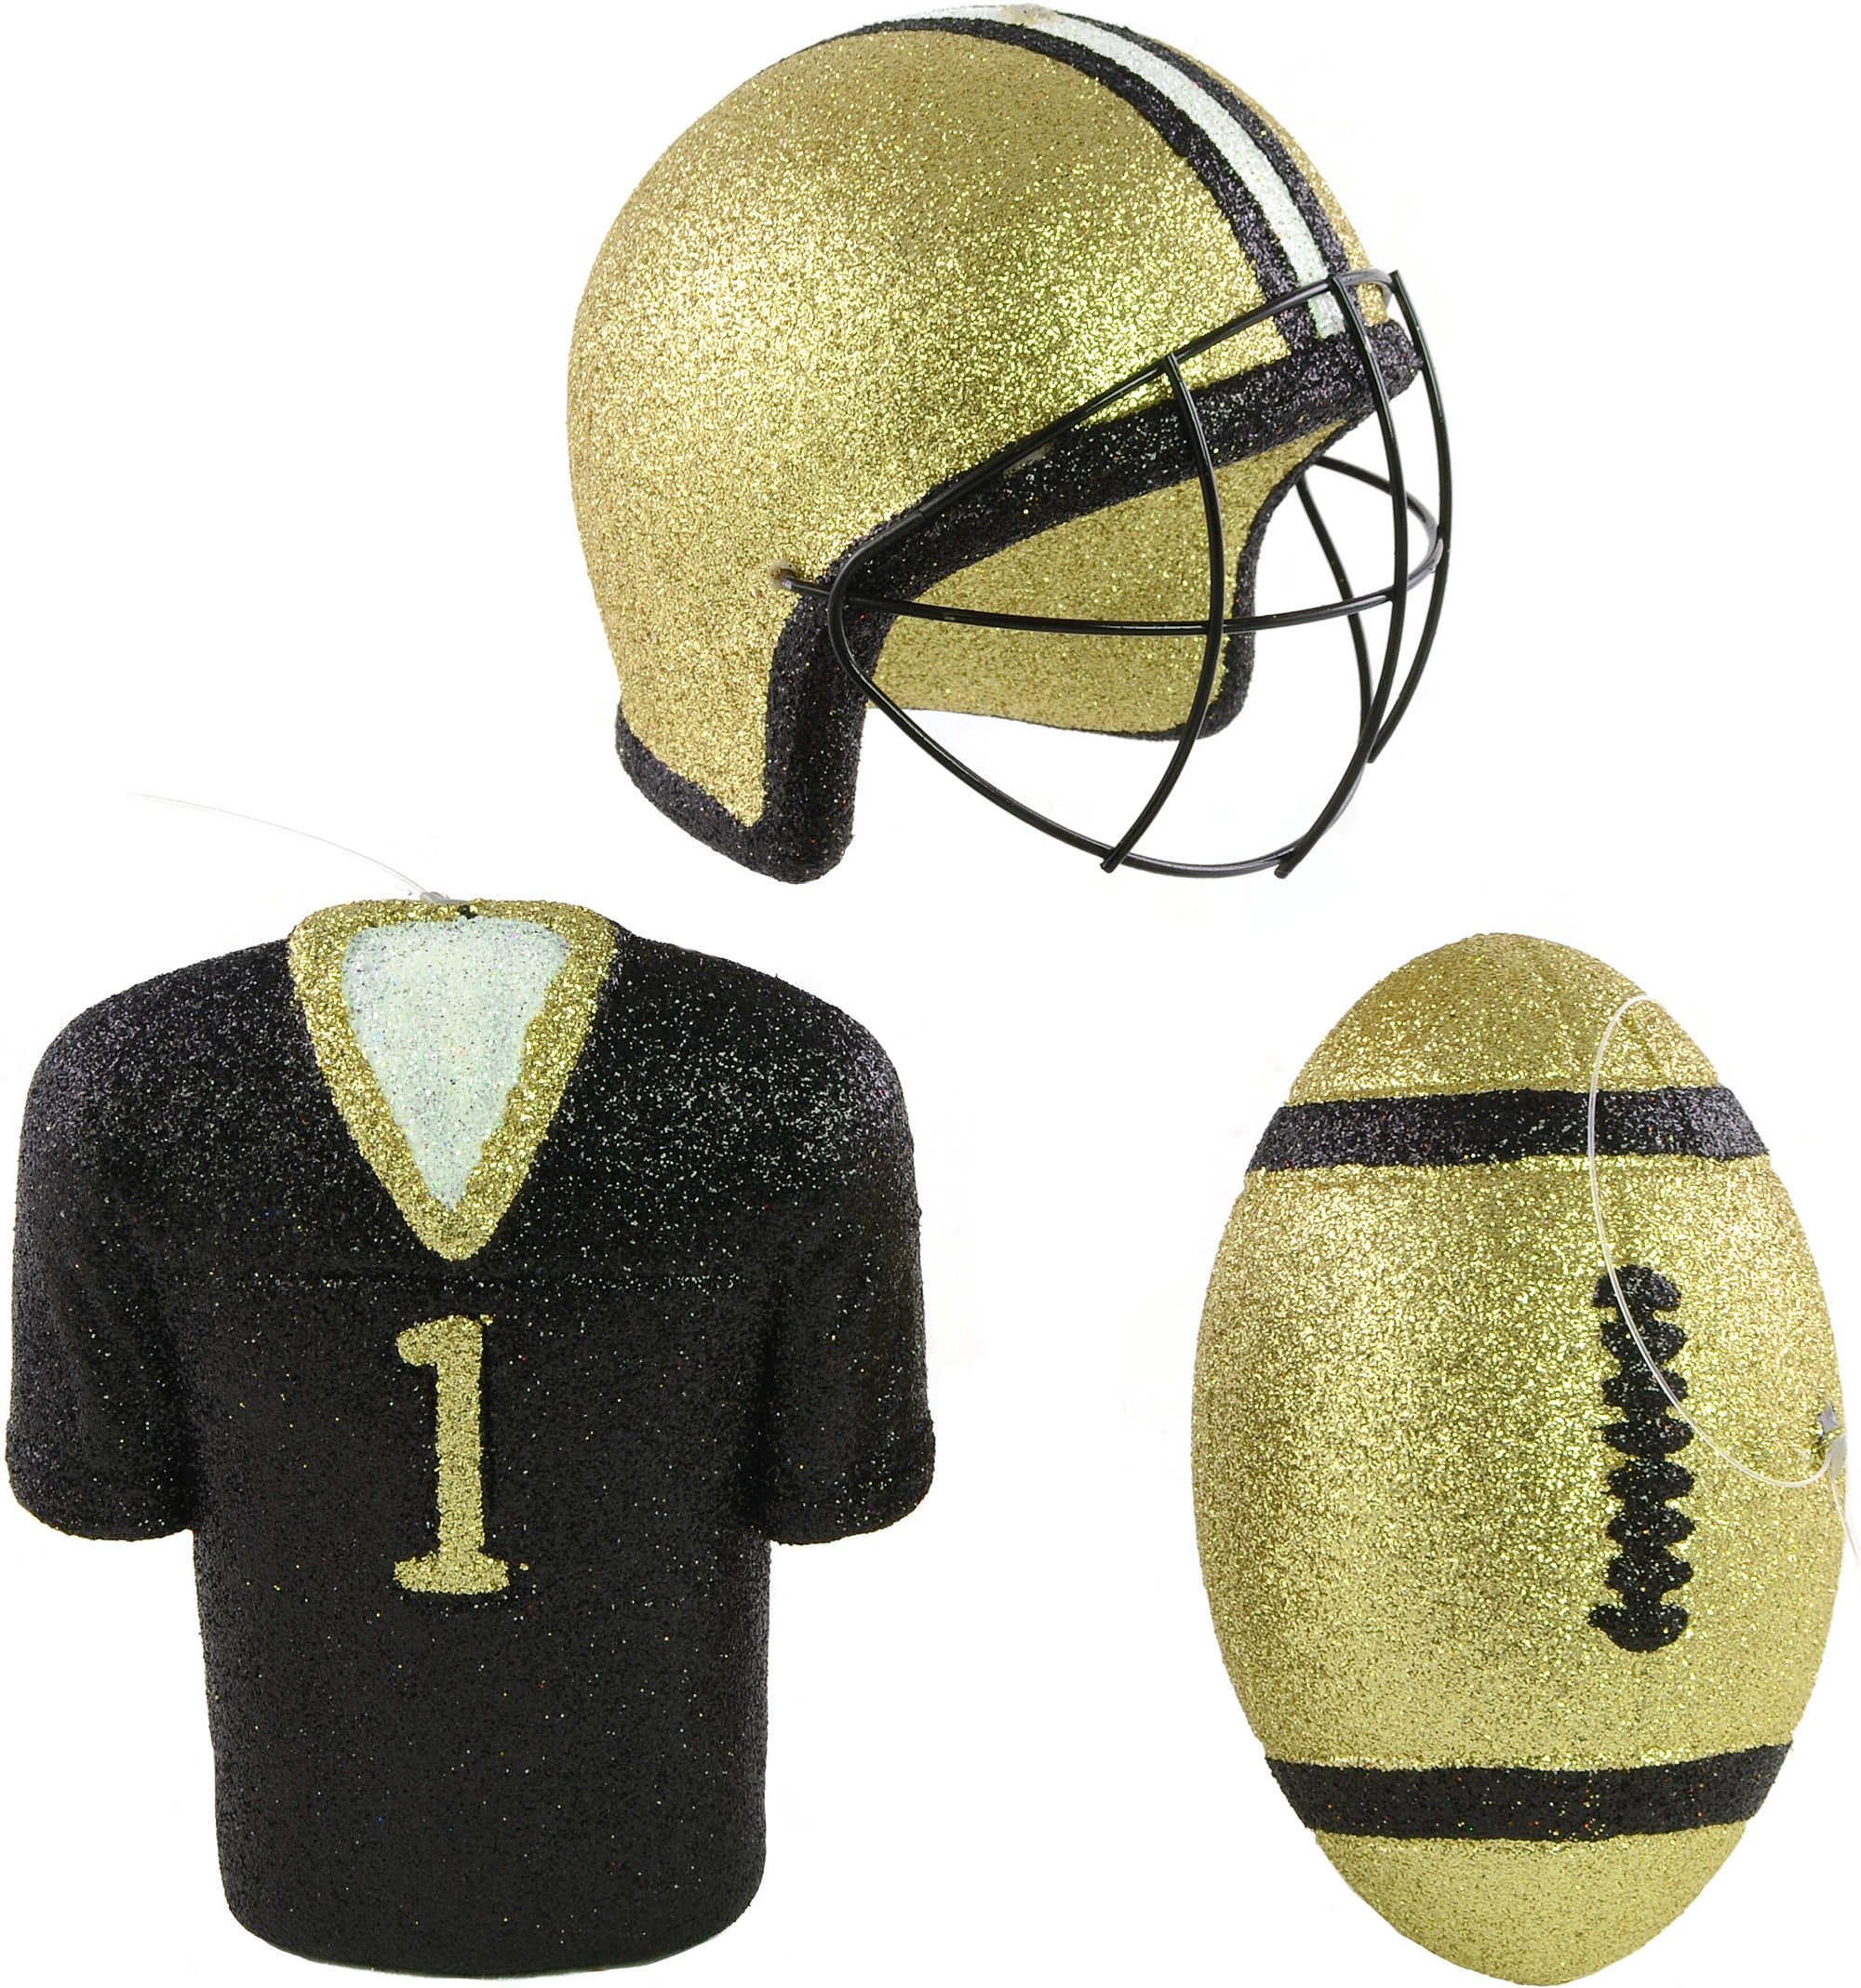 Glitter Football Ornament Assortment: Black & Gold ( Set of 3)